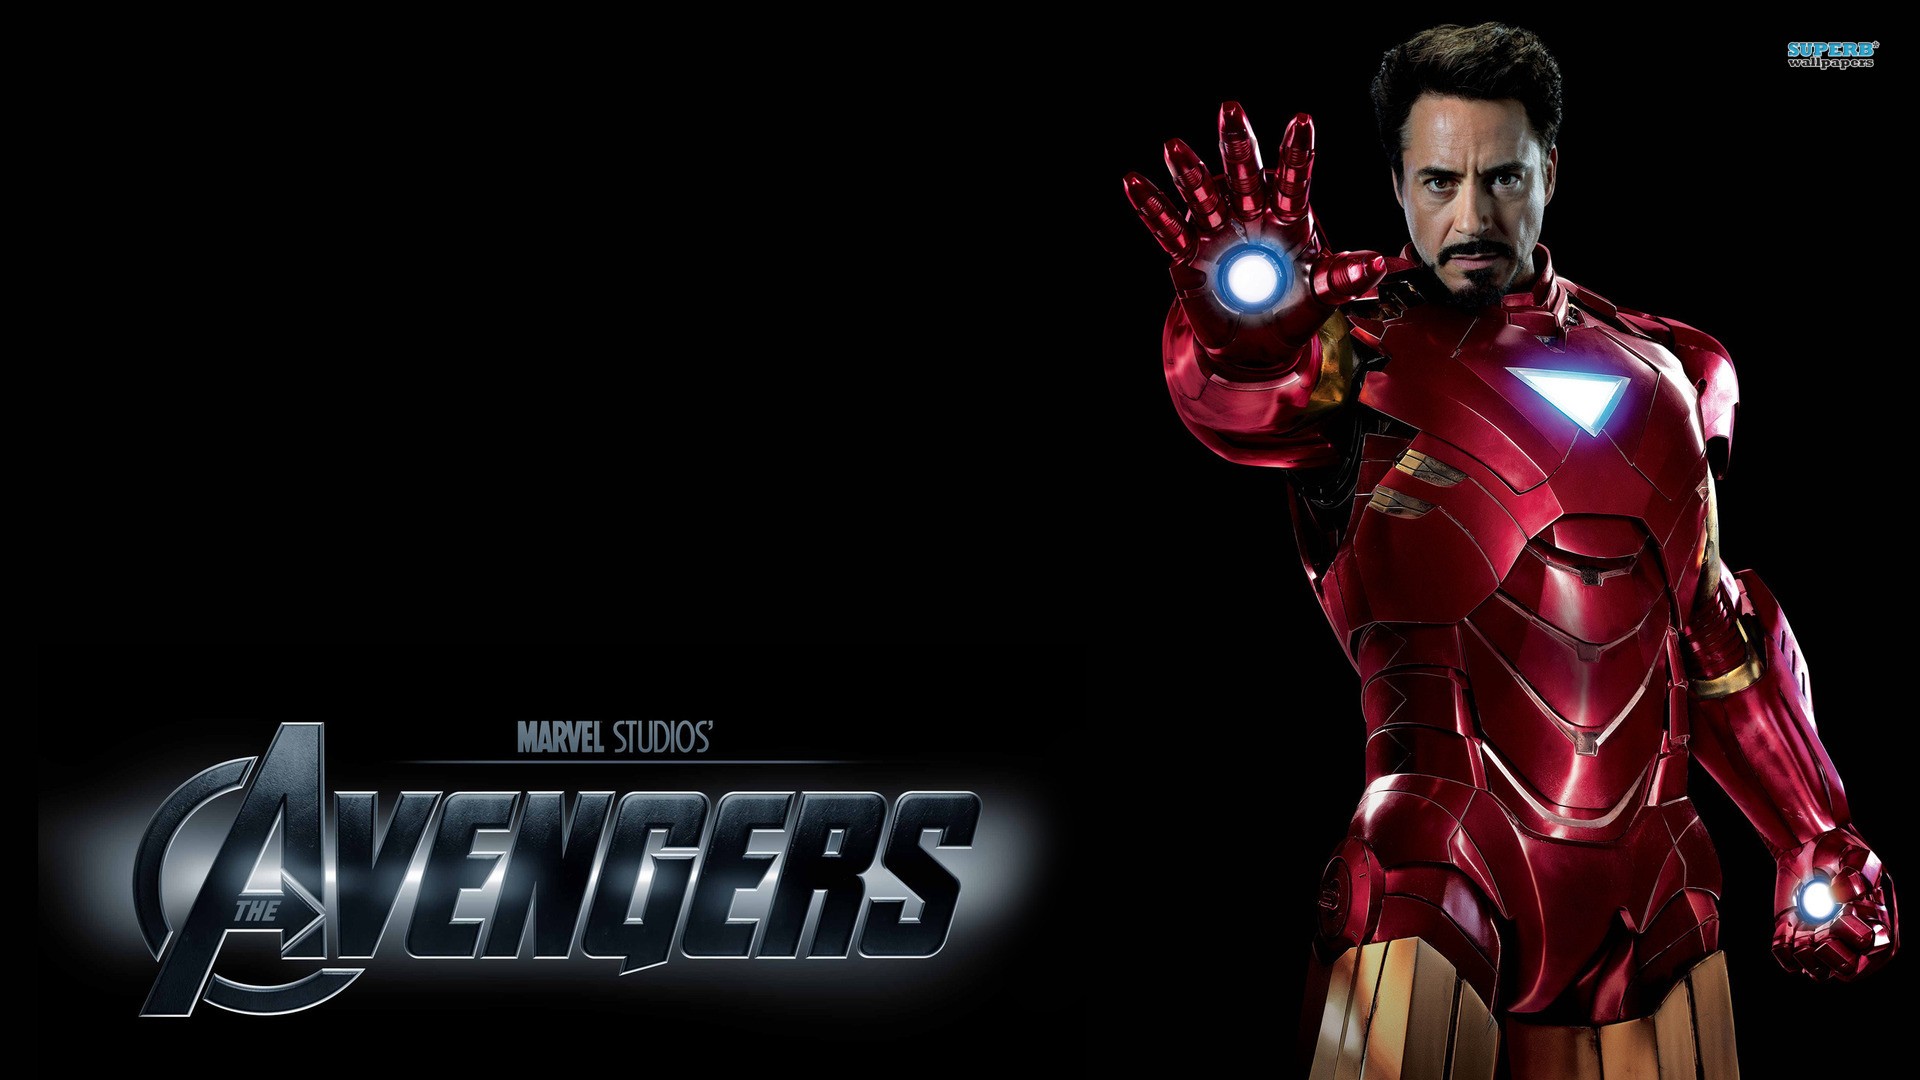 The Avengers, Iron Man, Tony Stark, Robert Downey Jr. Wallpaper